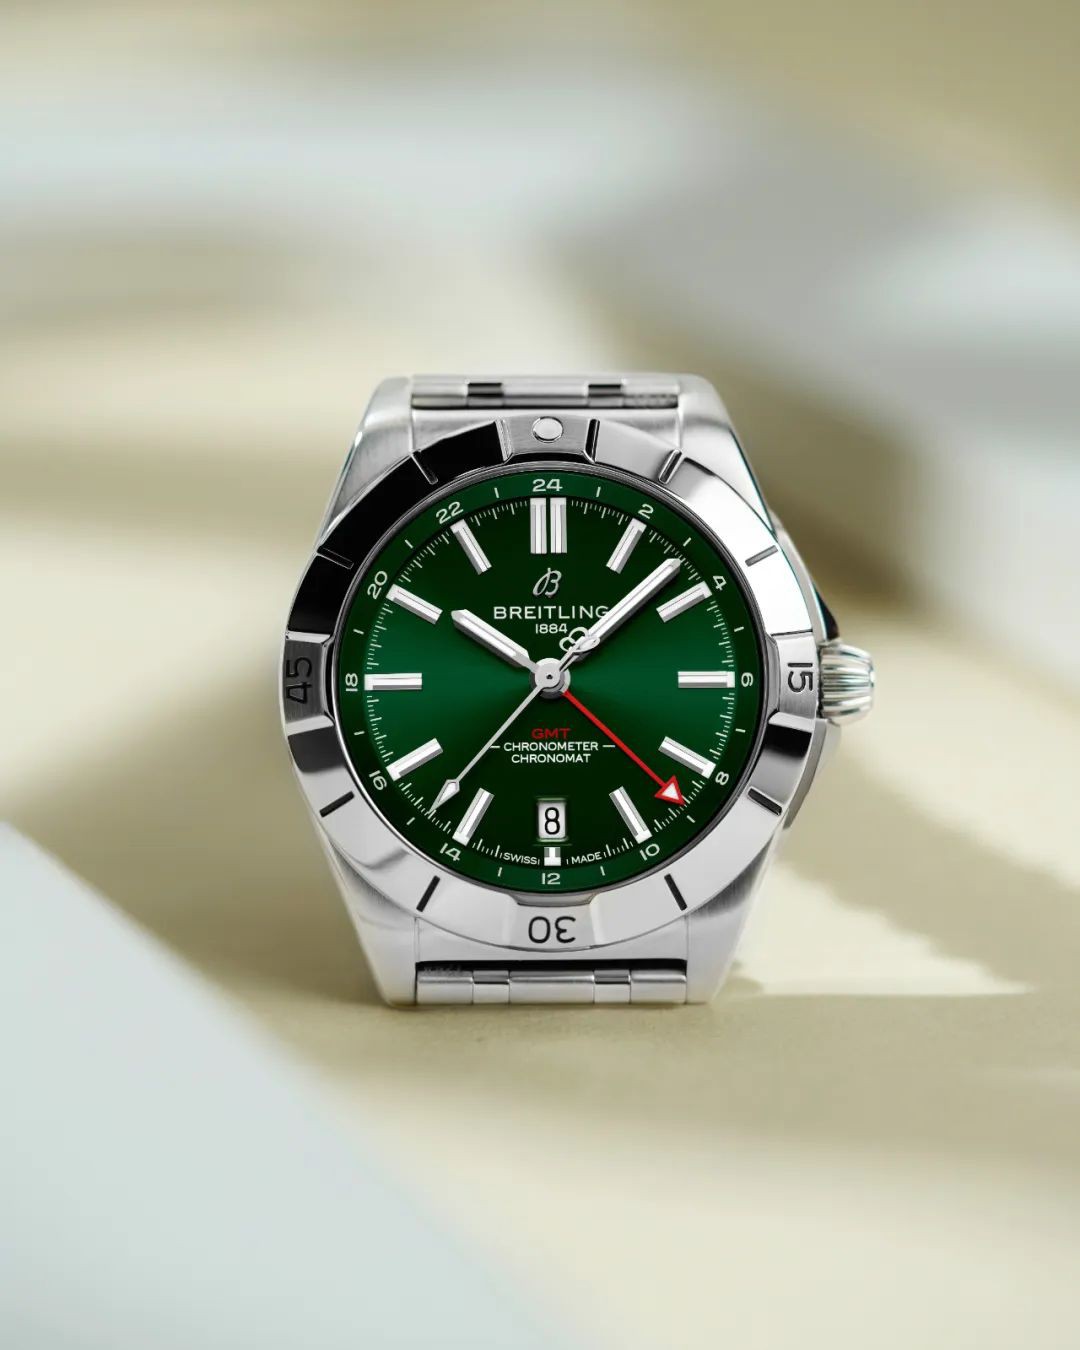 Breitling replica watch model 8